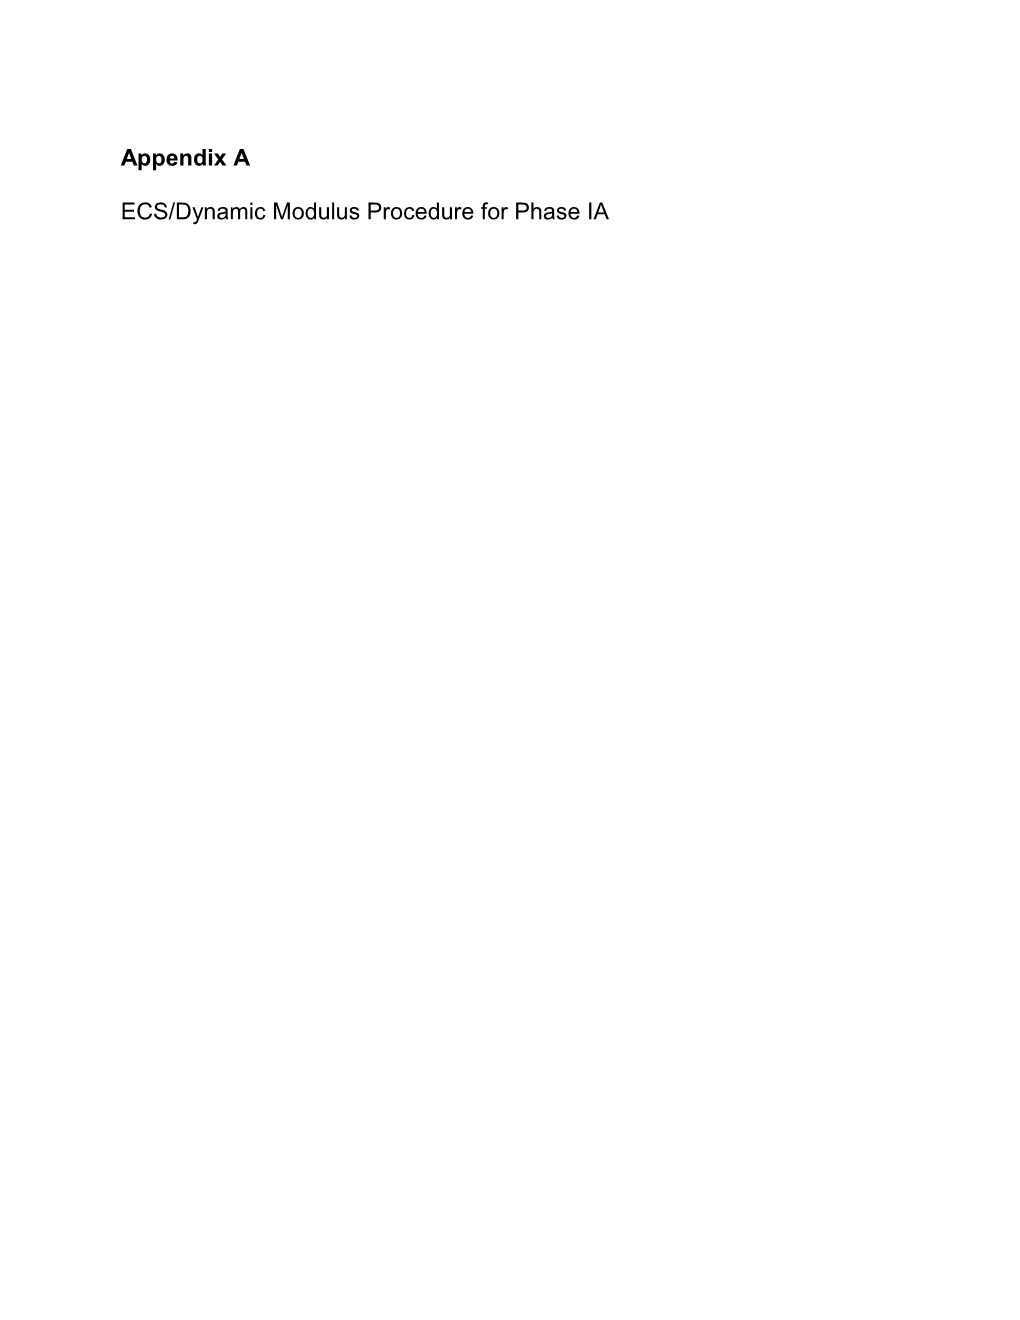 ECS/Dynamic Modulus Procedurefor Phase IA